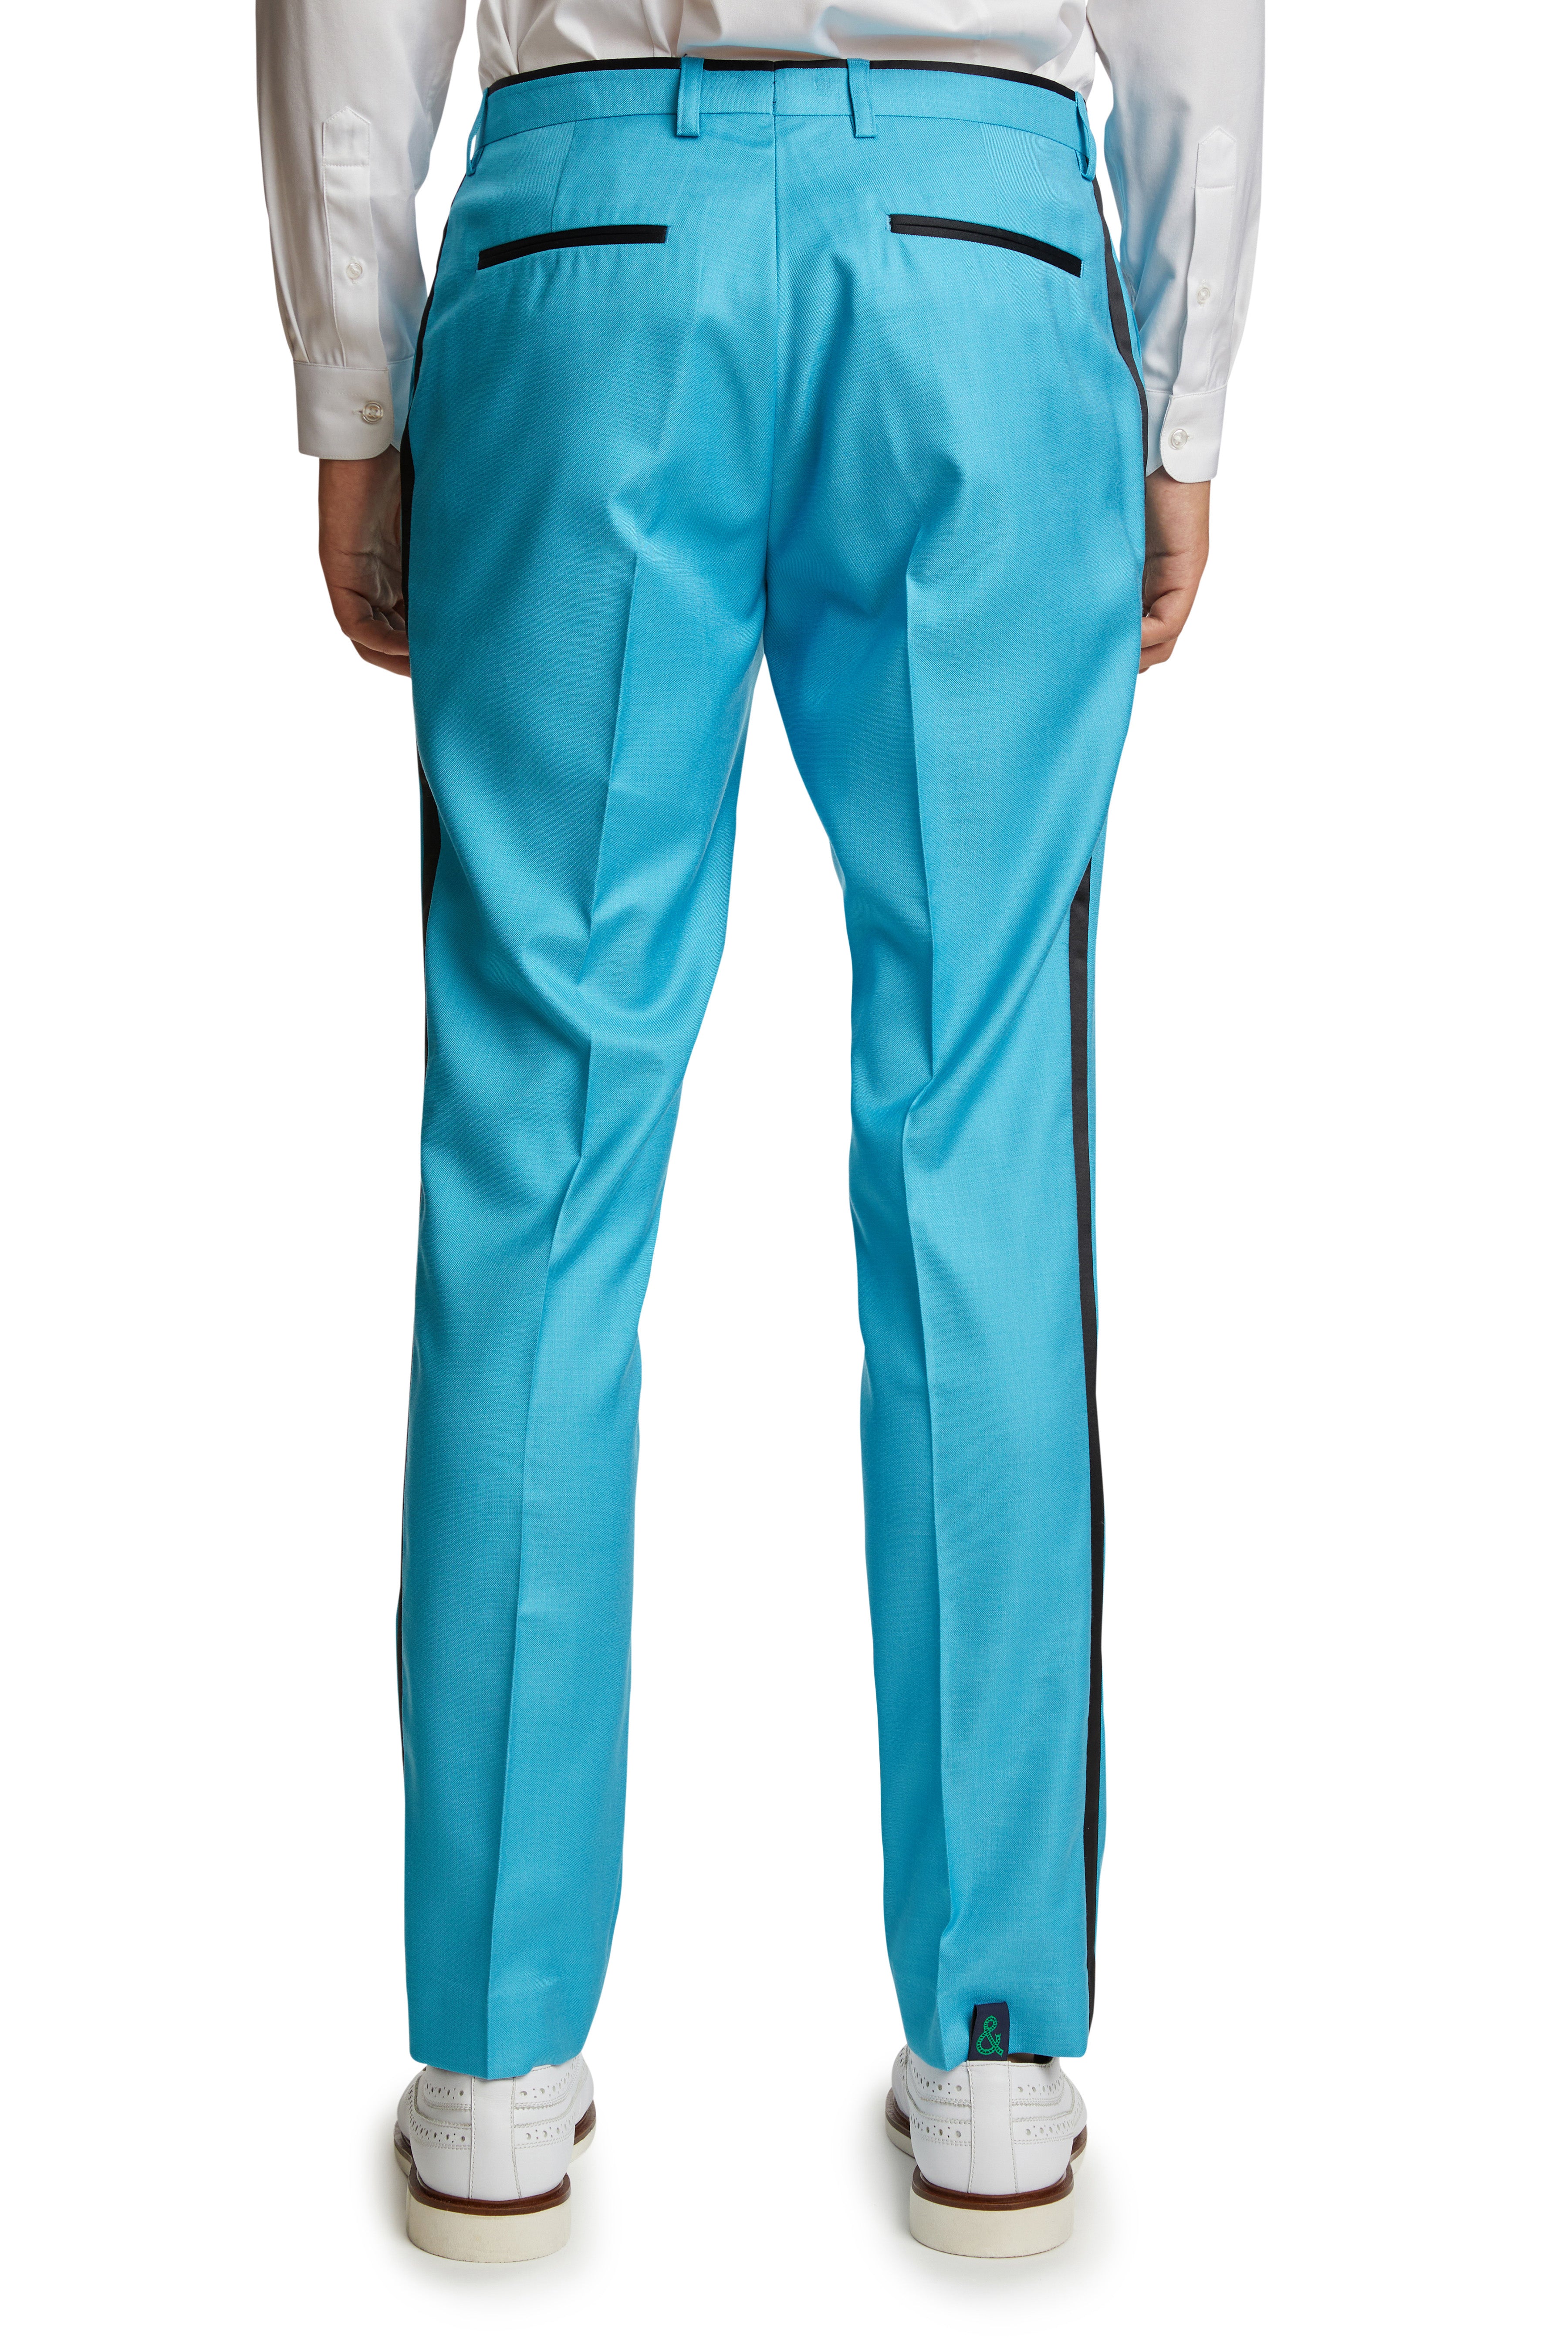 Sloane Tux Pants - slim - Turquoise